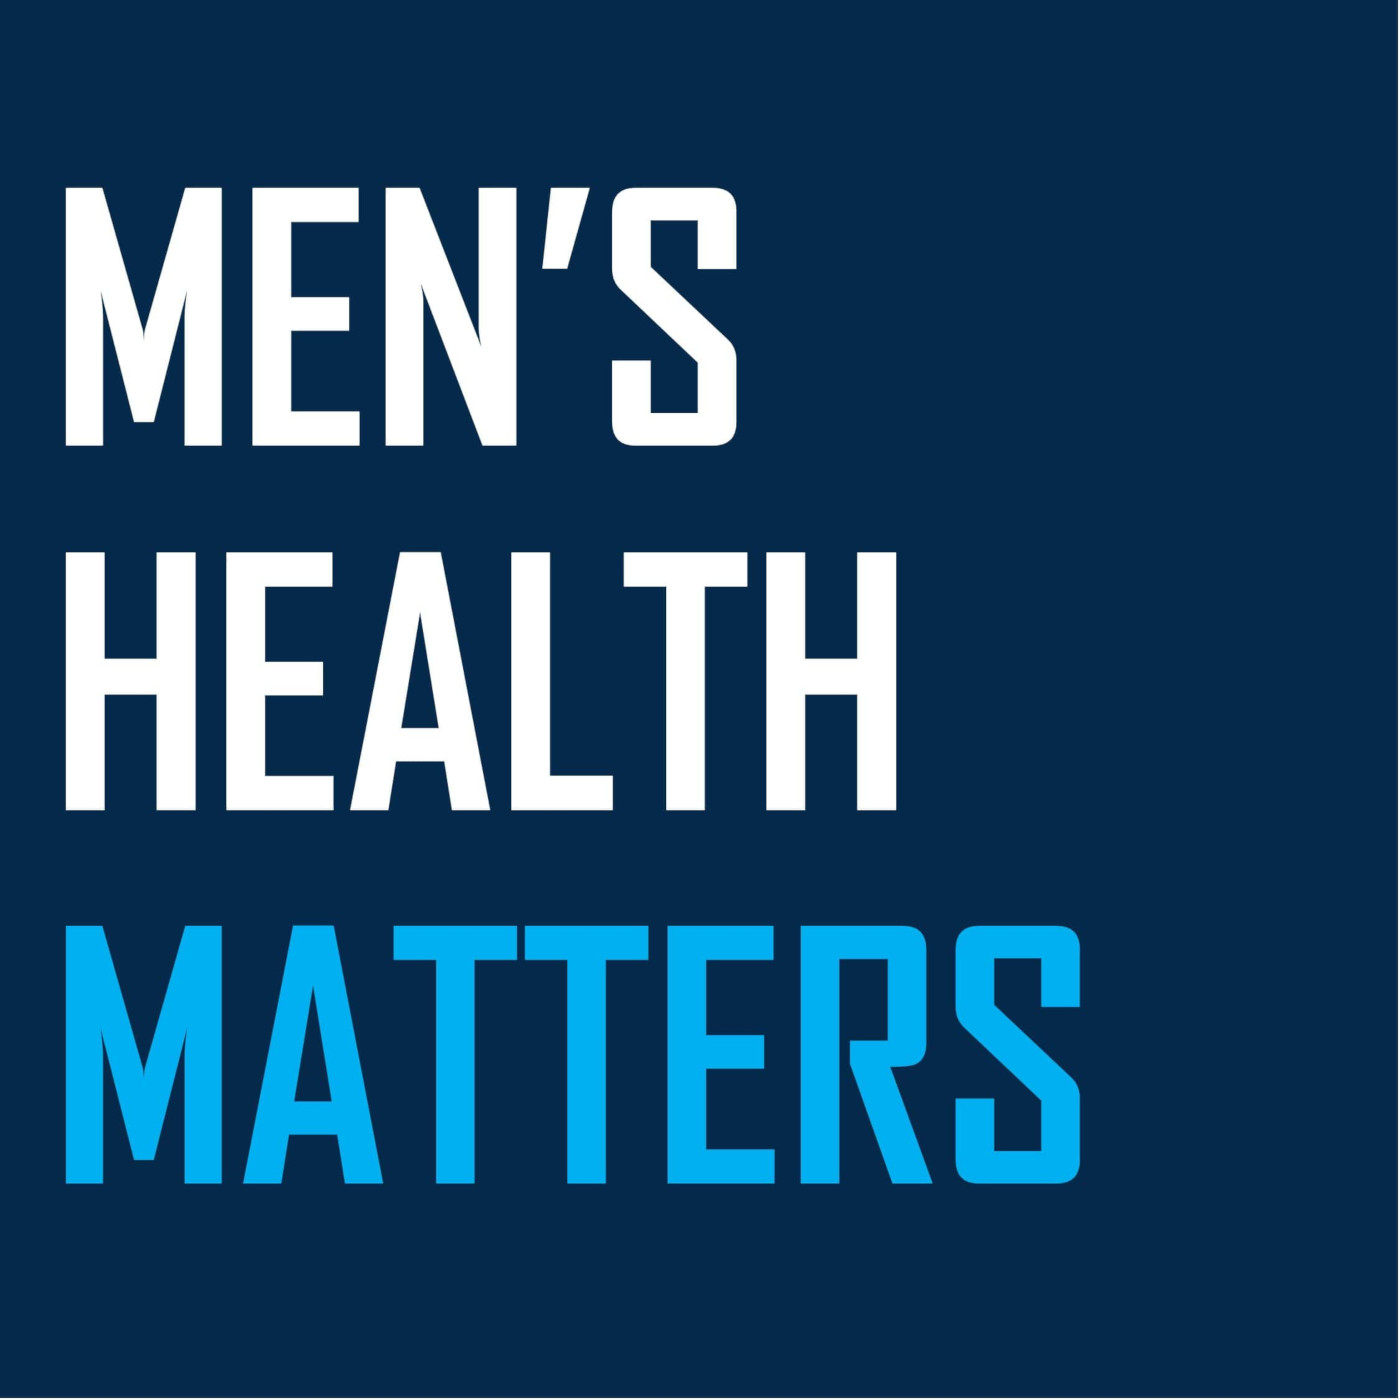 20210318161808-mens-health-matters1400x1400-12